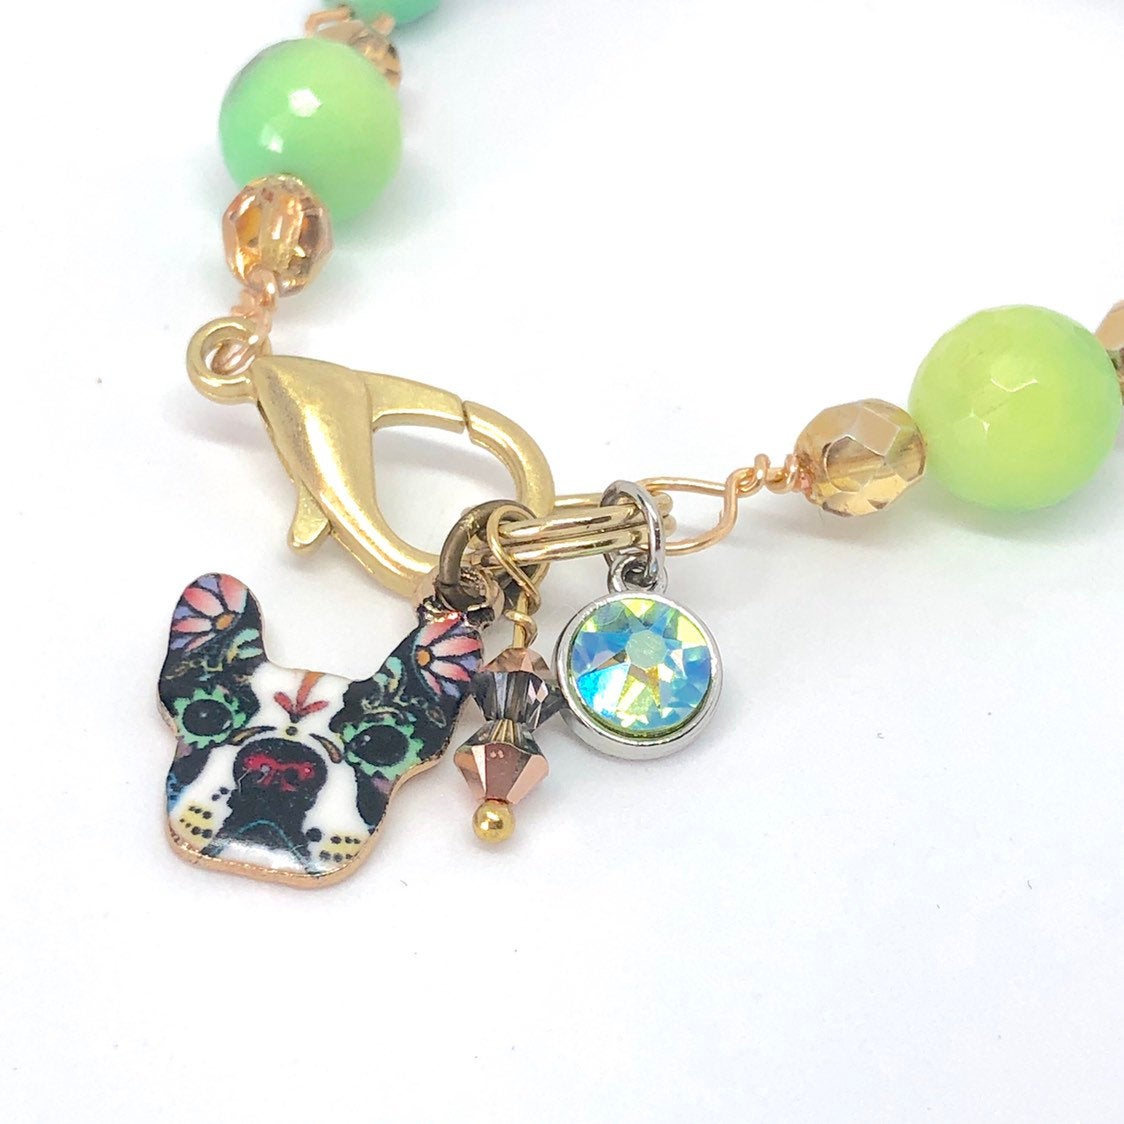 Teal and Green Dog Charm Bracelet